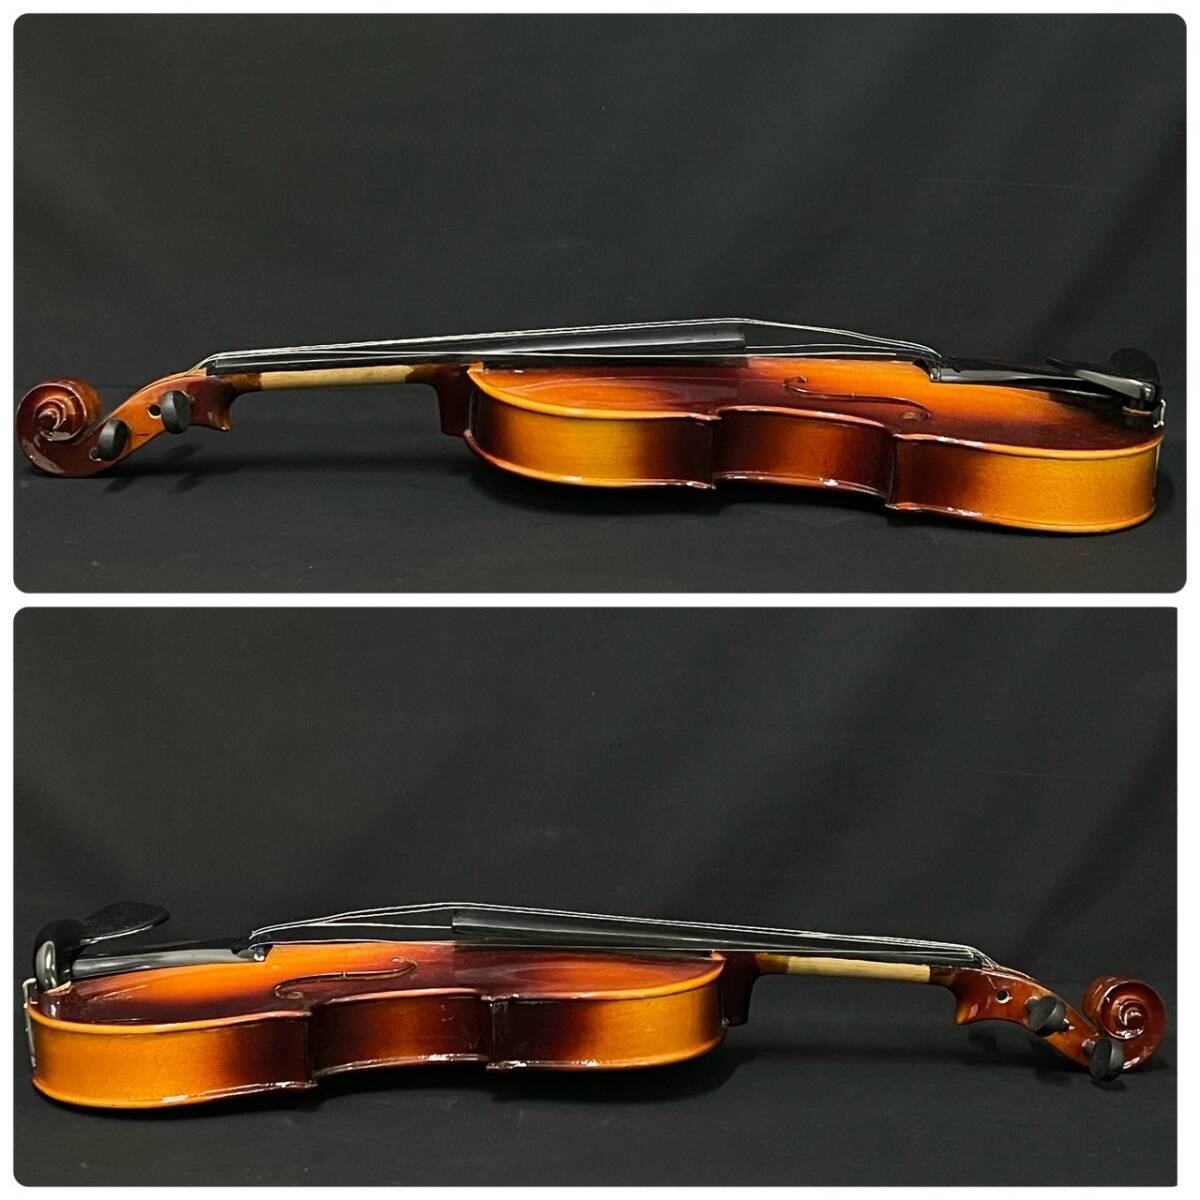 BCg311I 120 Bestler ベスラー ヴァイオリン 上海 中国 茶色 ハードケース 弓 あご当て 付 バイオリン 弦楽器 楽器 Shanghai_画像5